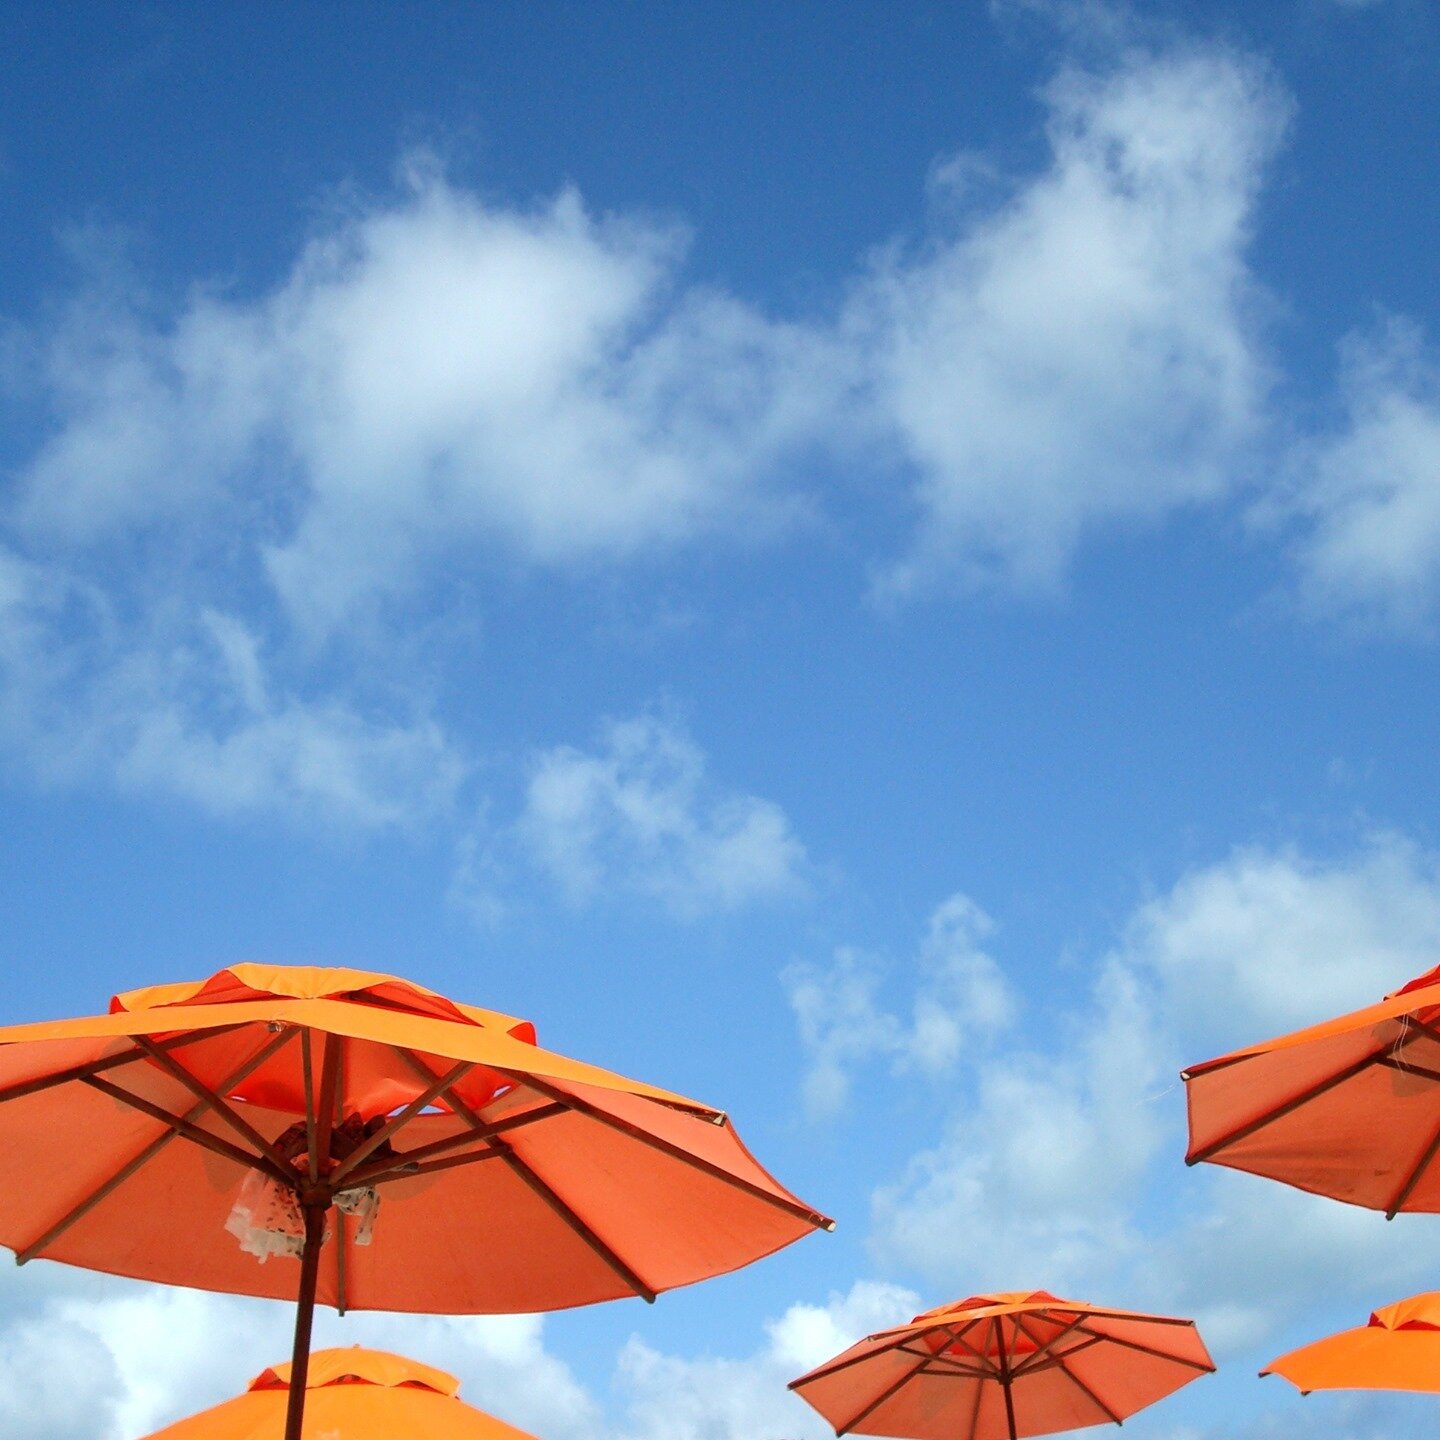 The only umbrellas we're interested in seeing from now on... ☀️⛱️⁠
⁠
#summer #herecomesthesun #sunshine #liquidsunshine #bankholiday #holiday #britishweather #raingoaway #prayforsun #drinktrove #trove #spritz #summer #summerspritz